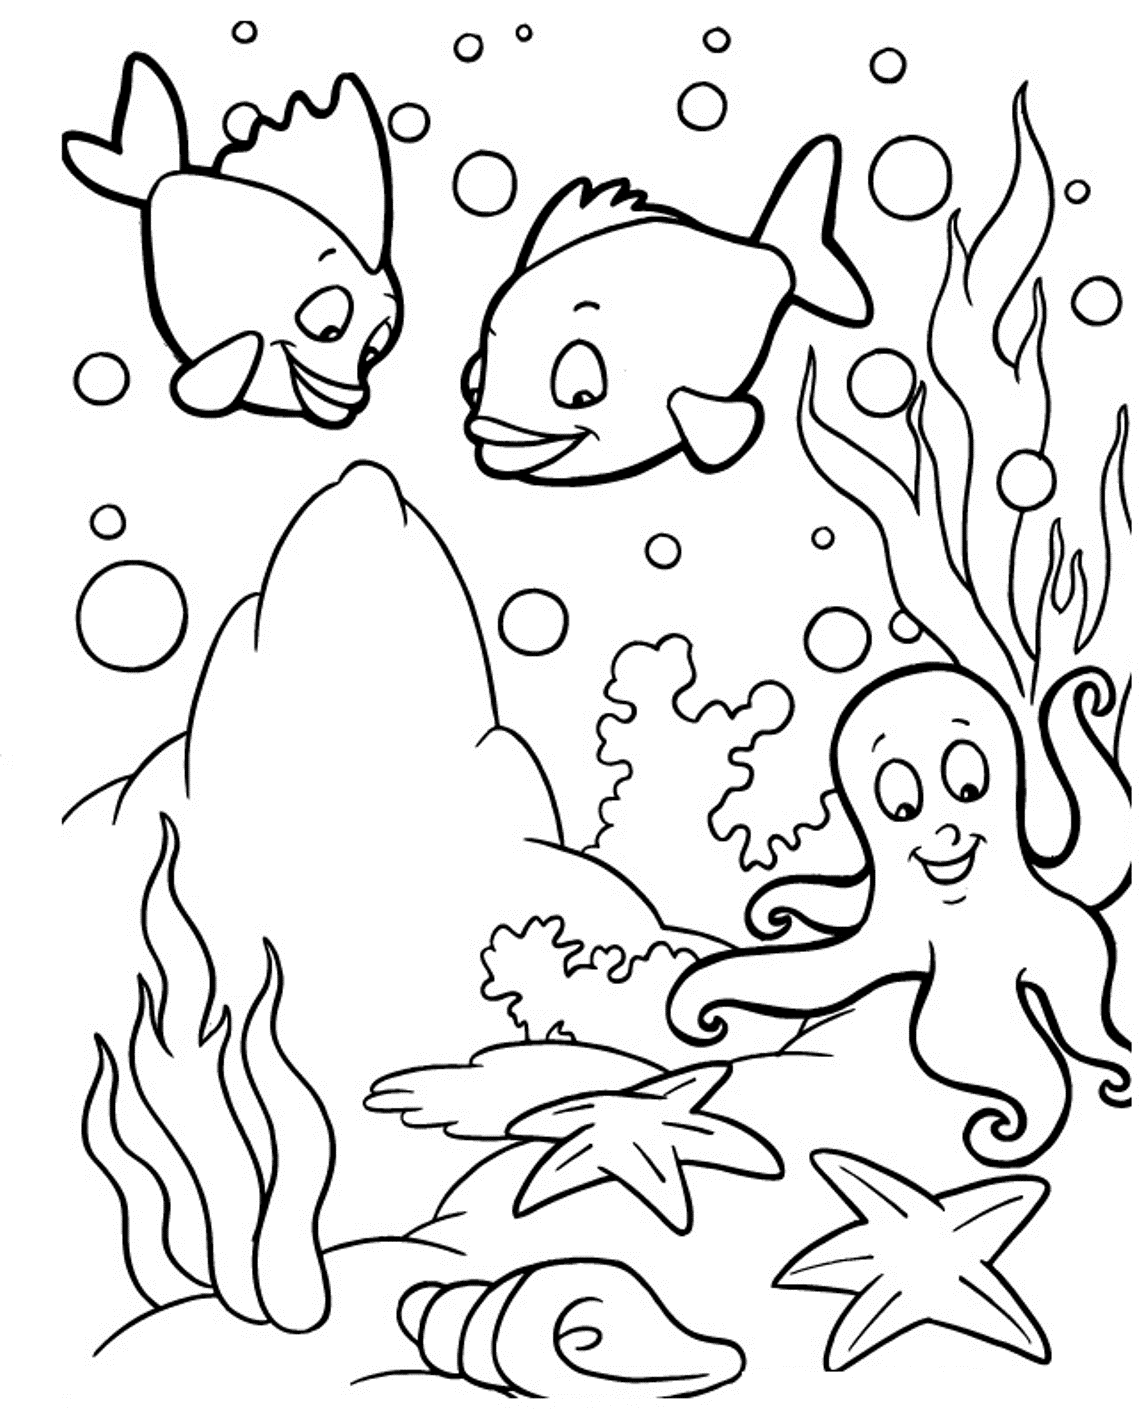 Cartoon Sea Animals Coloring Pages Printable - Coloring Pages For ... -  Coloring Home